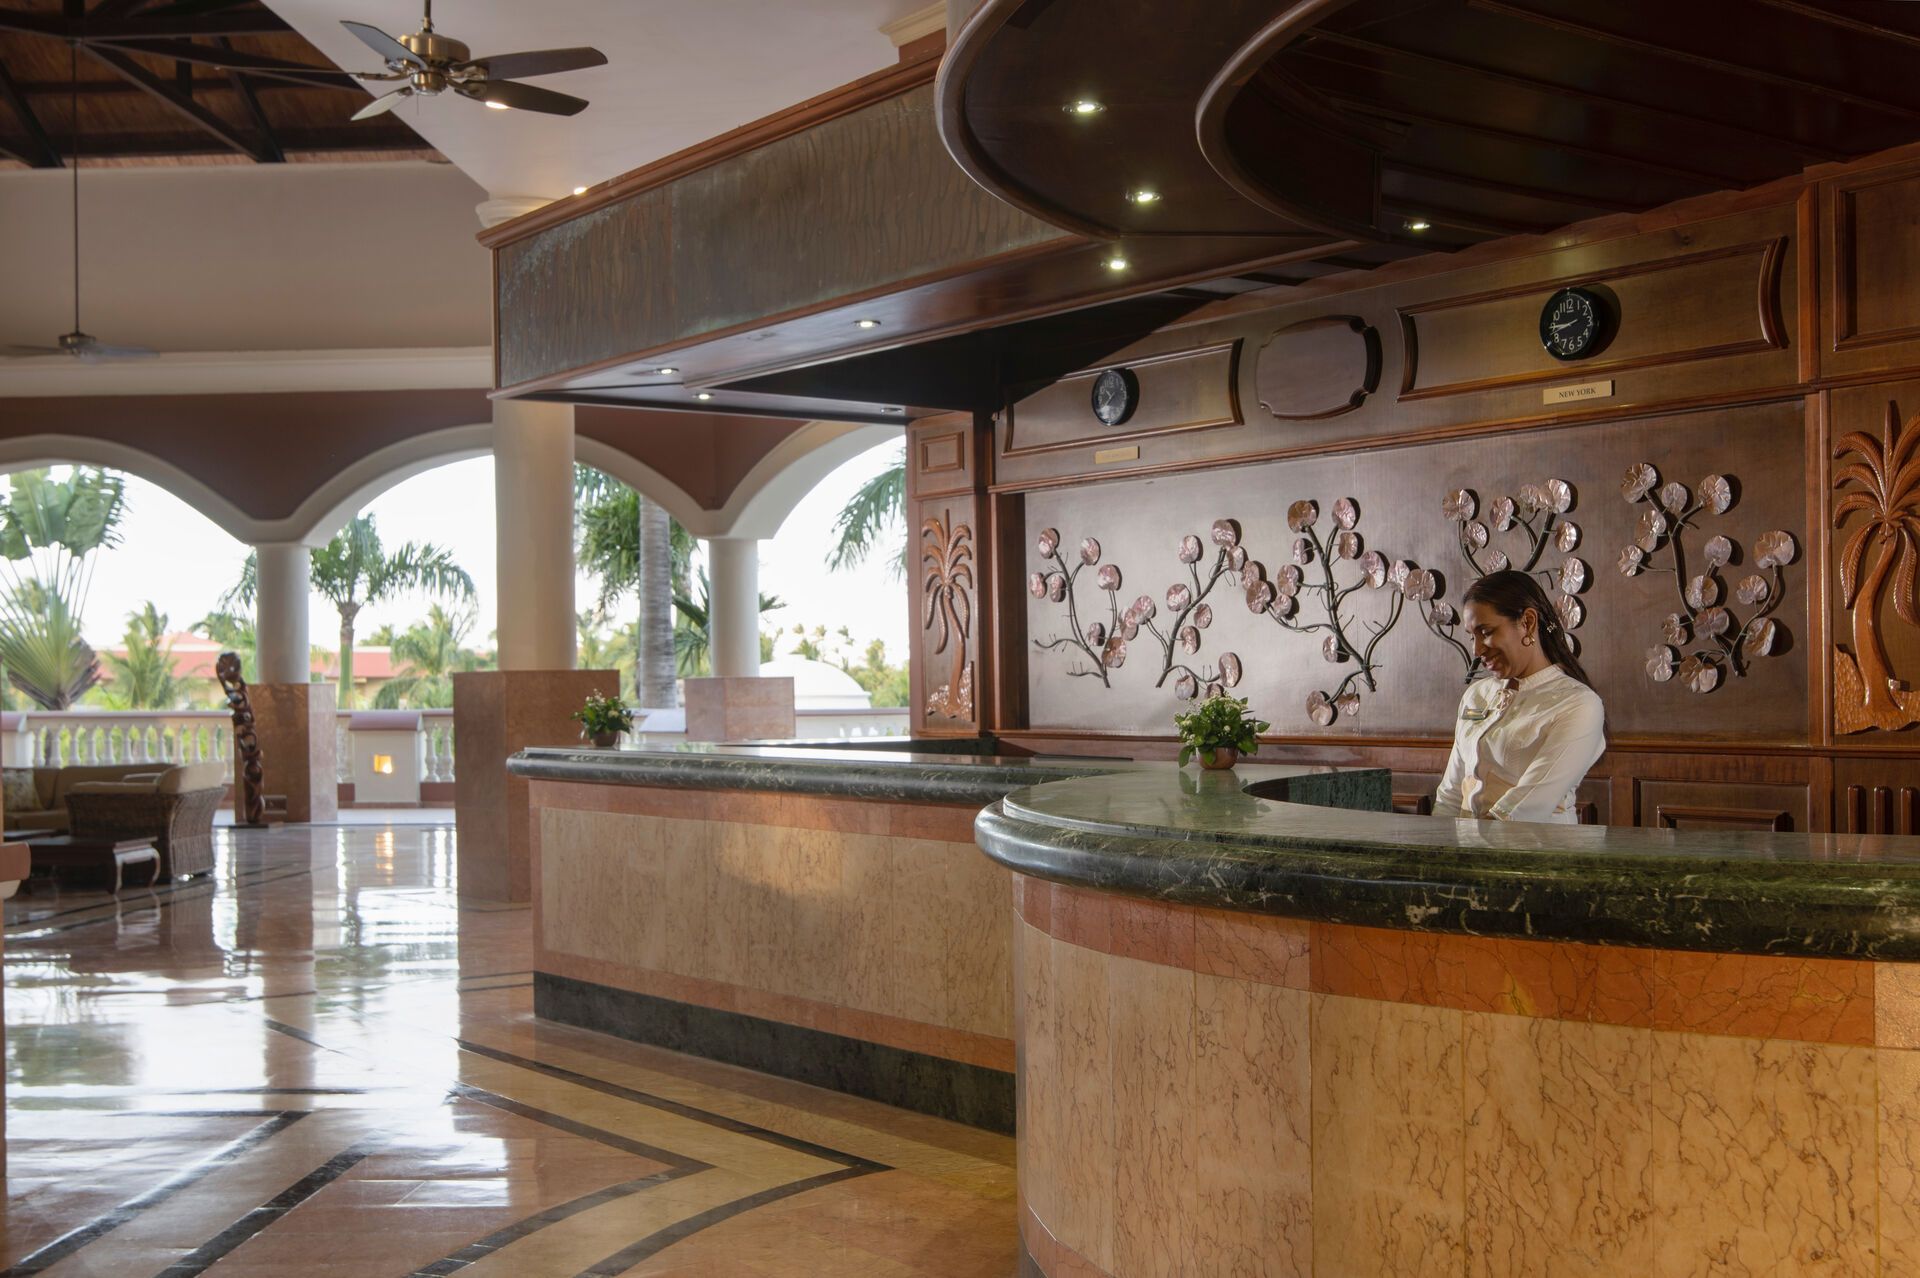 République Dominicaine - Uvero Alto - Hotel Jewel Punta Cana All Inclusive Beach Resort 4*